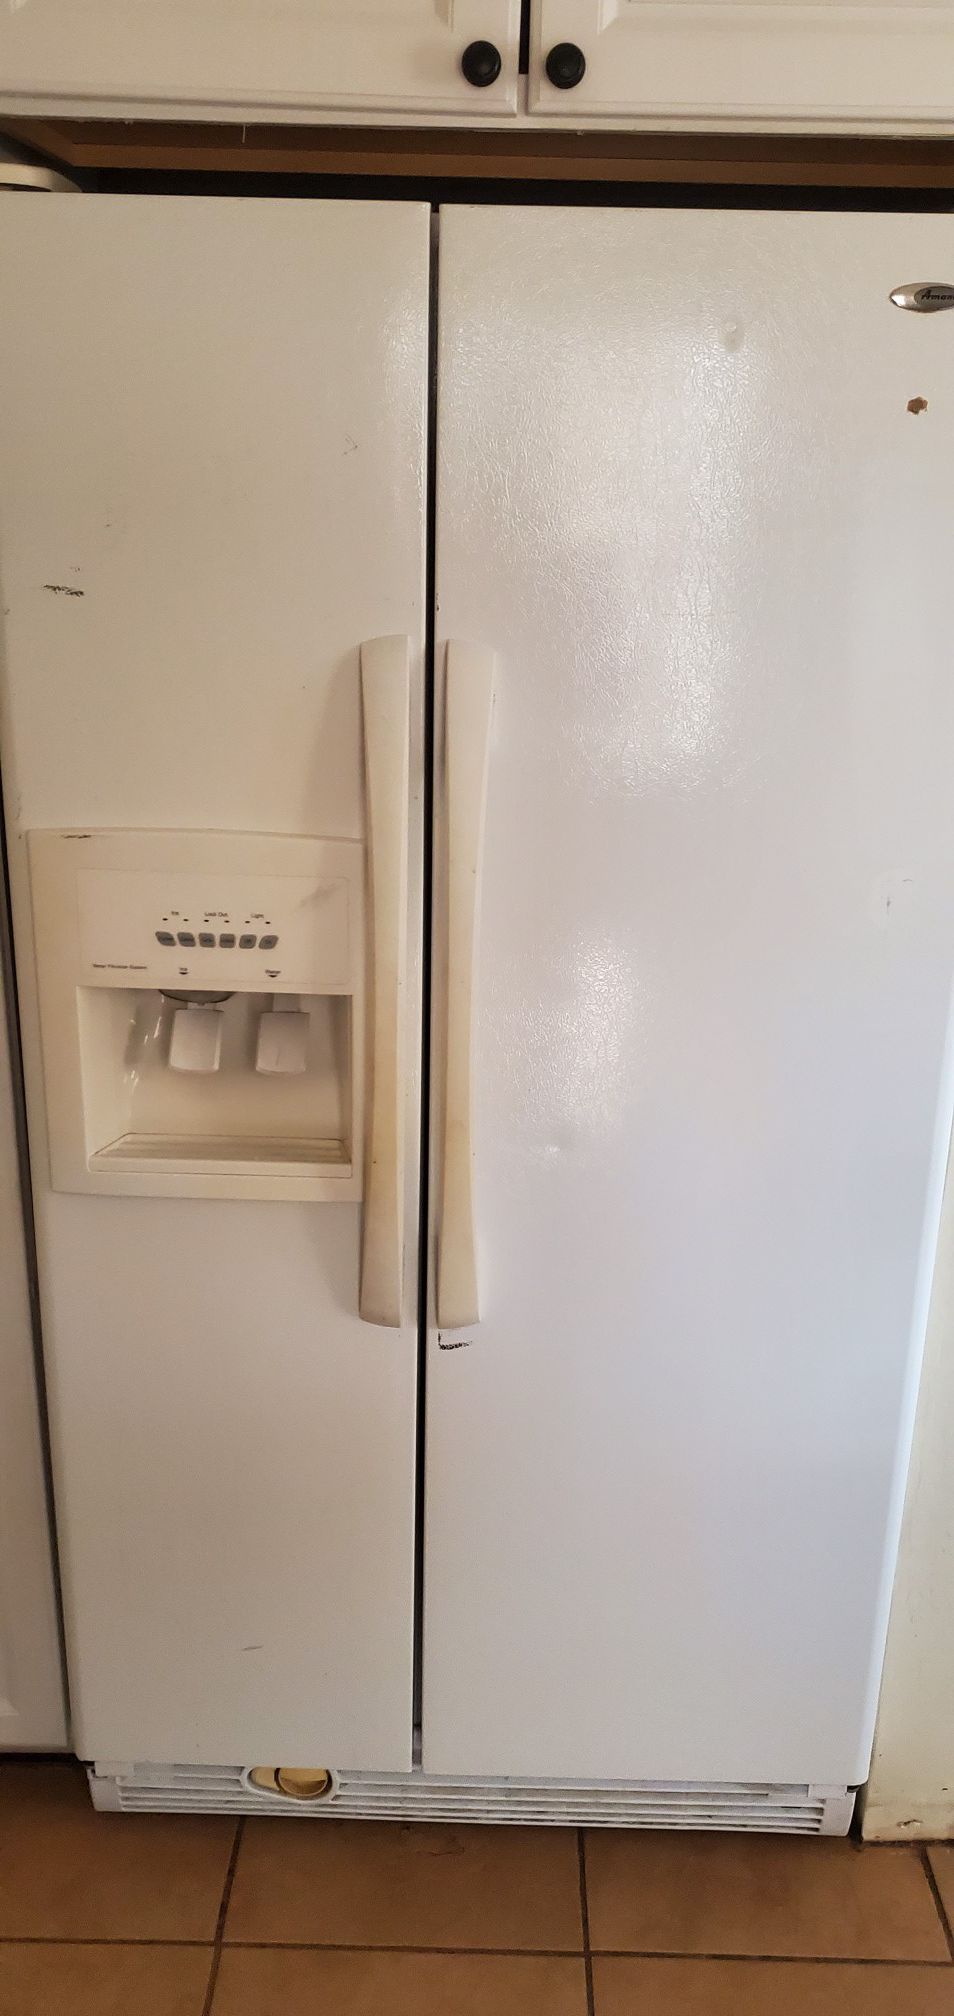 Amana double door refrigerator with ice and water dispenser